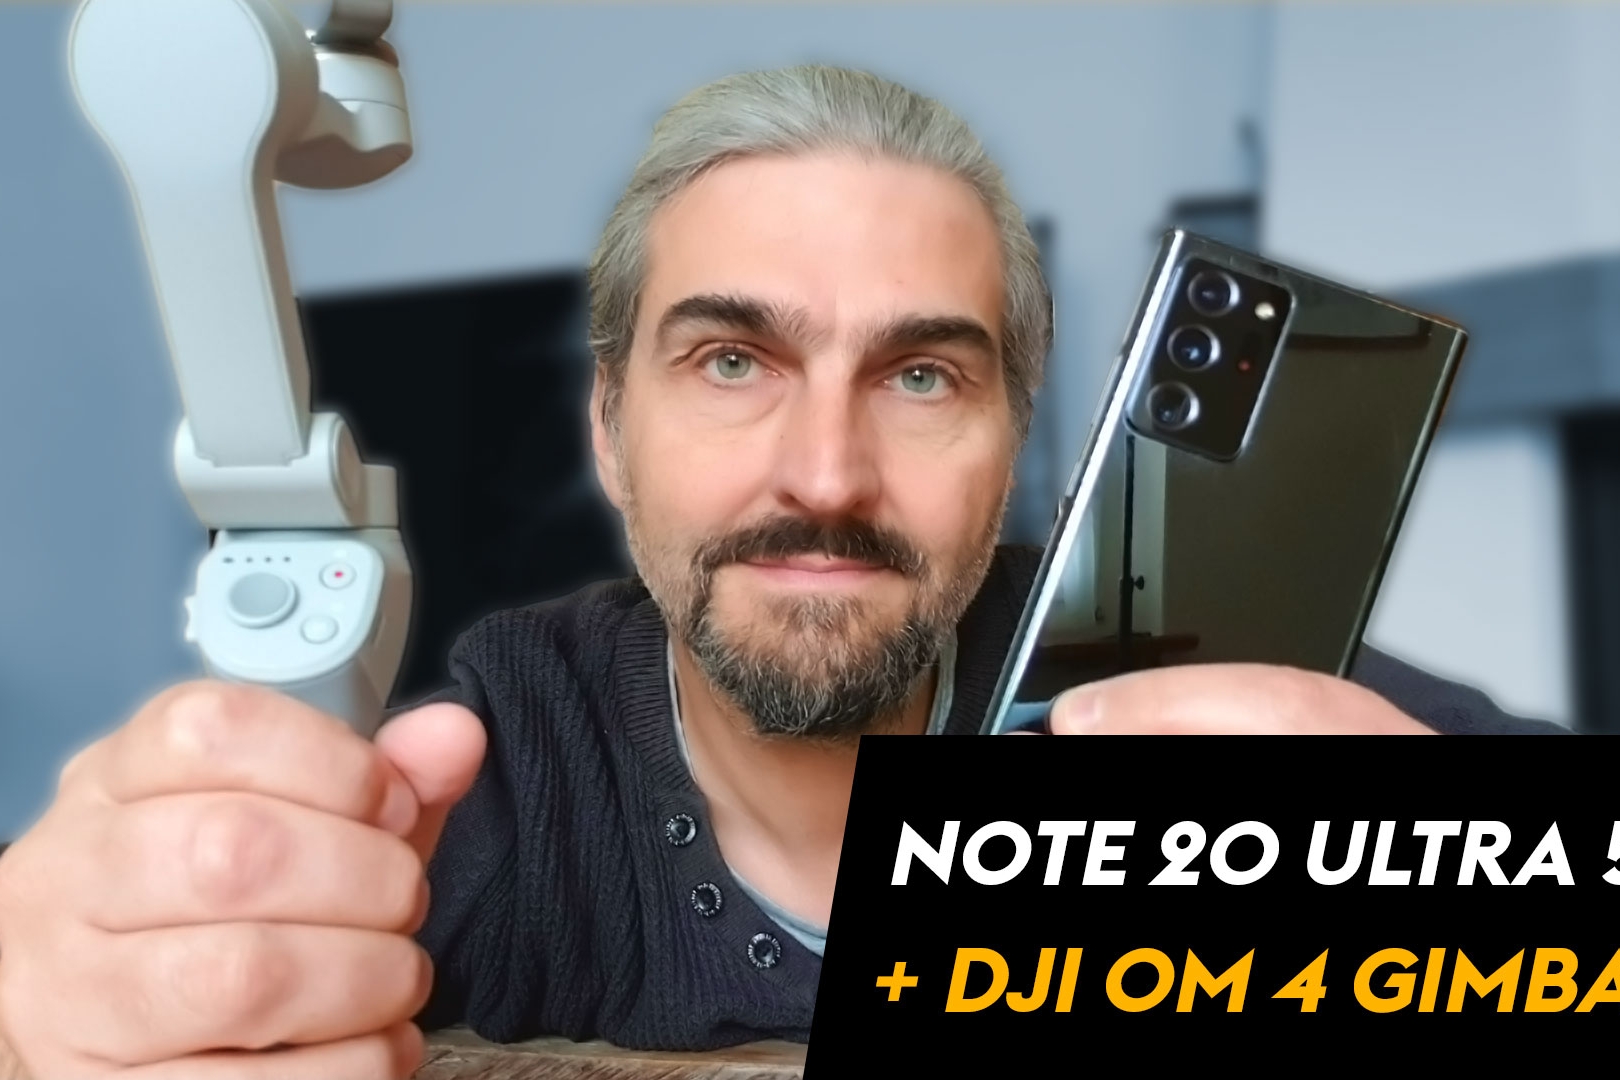 Samsung note 20 ultra DJI OM 4